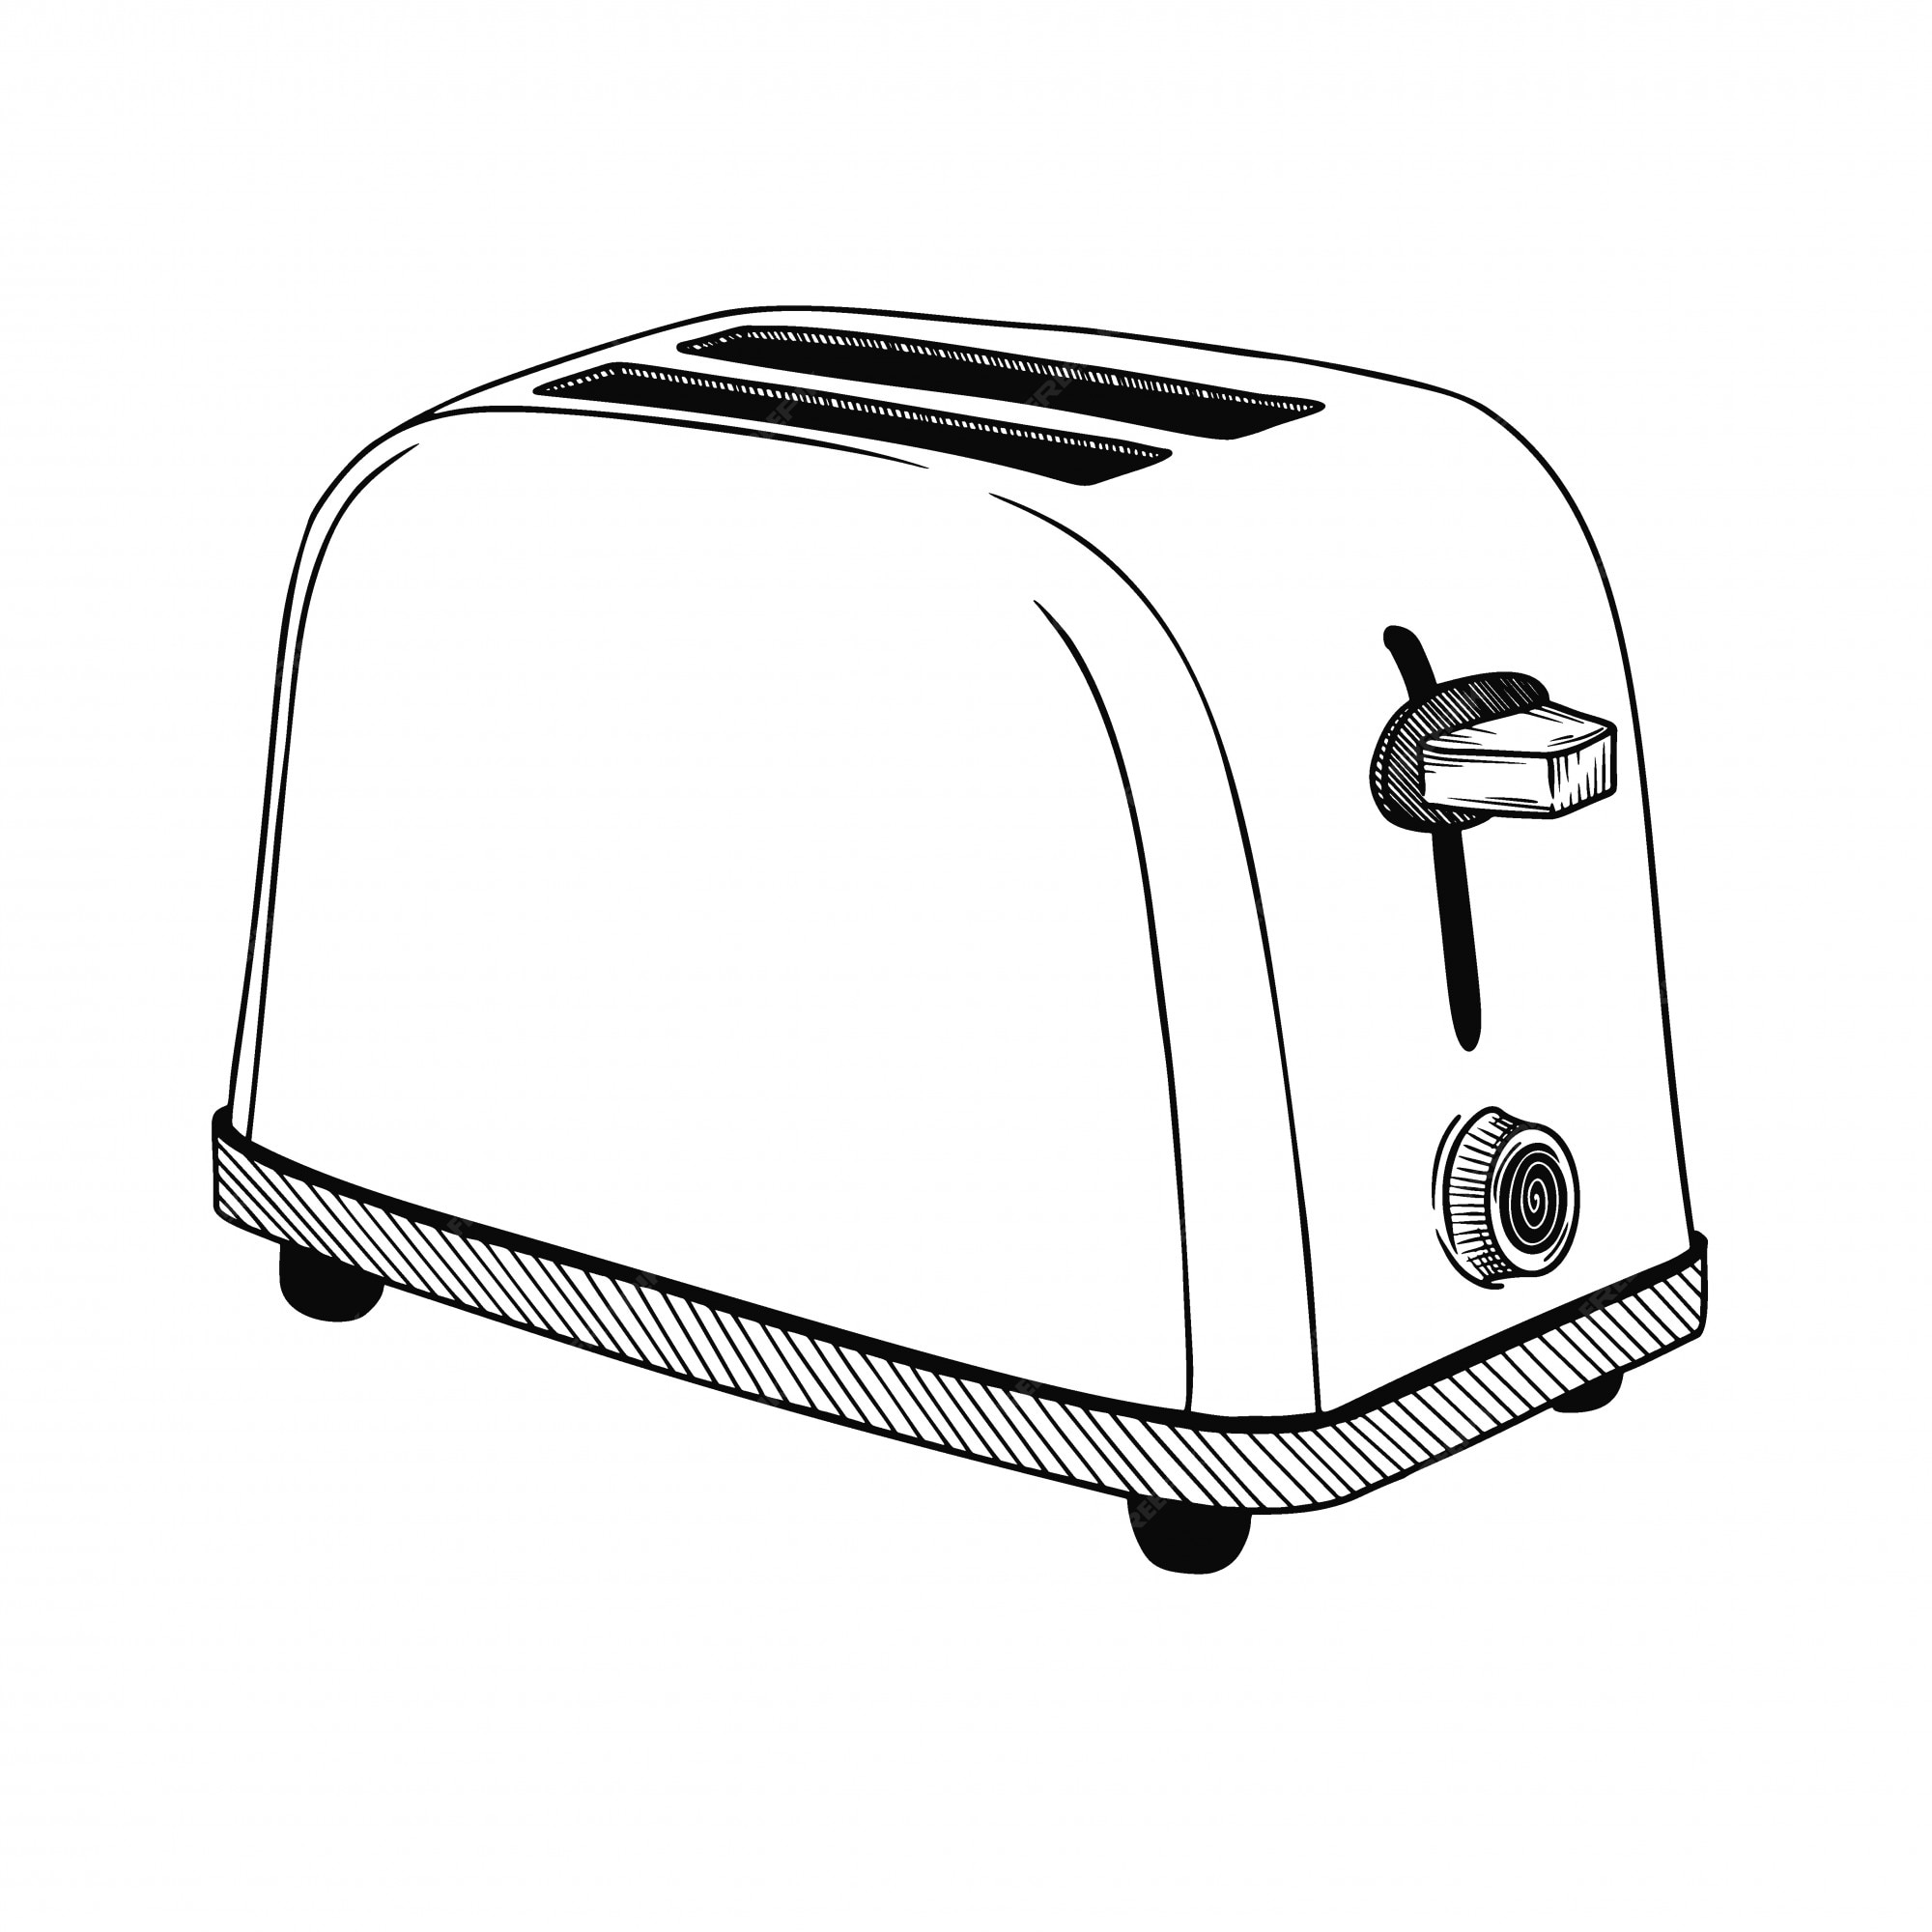 Premium Vector Sketch toaster illustration in sketch style